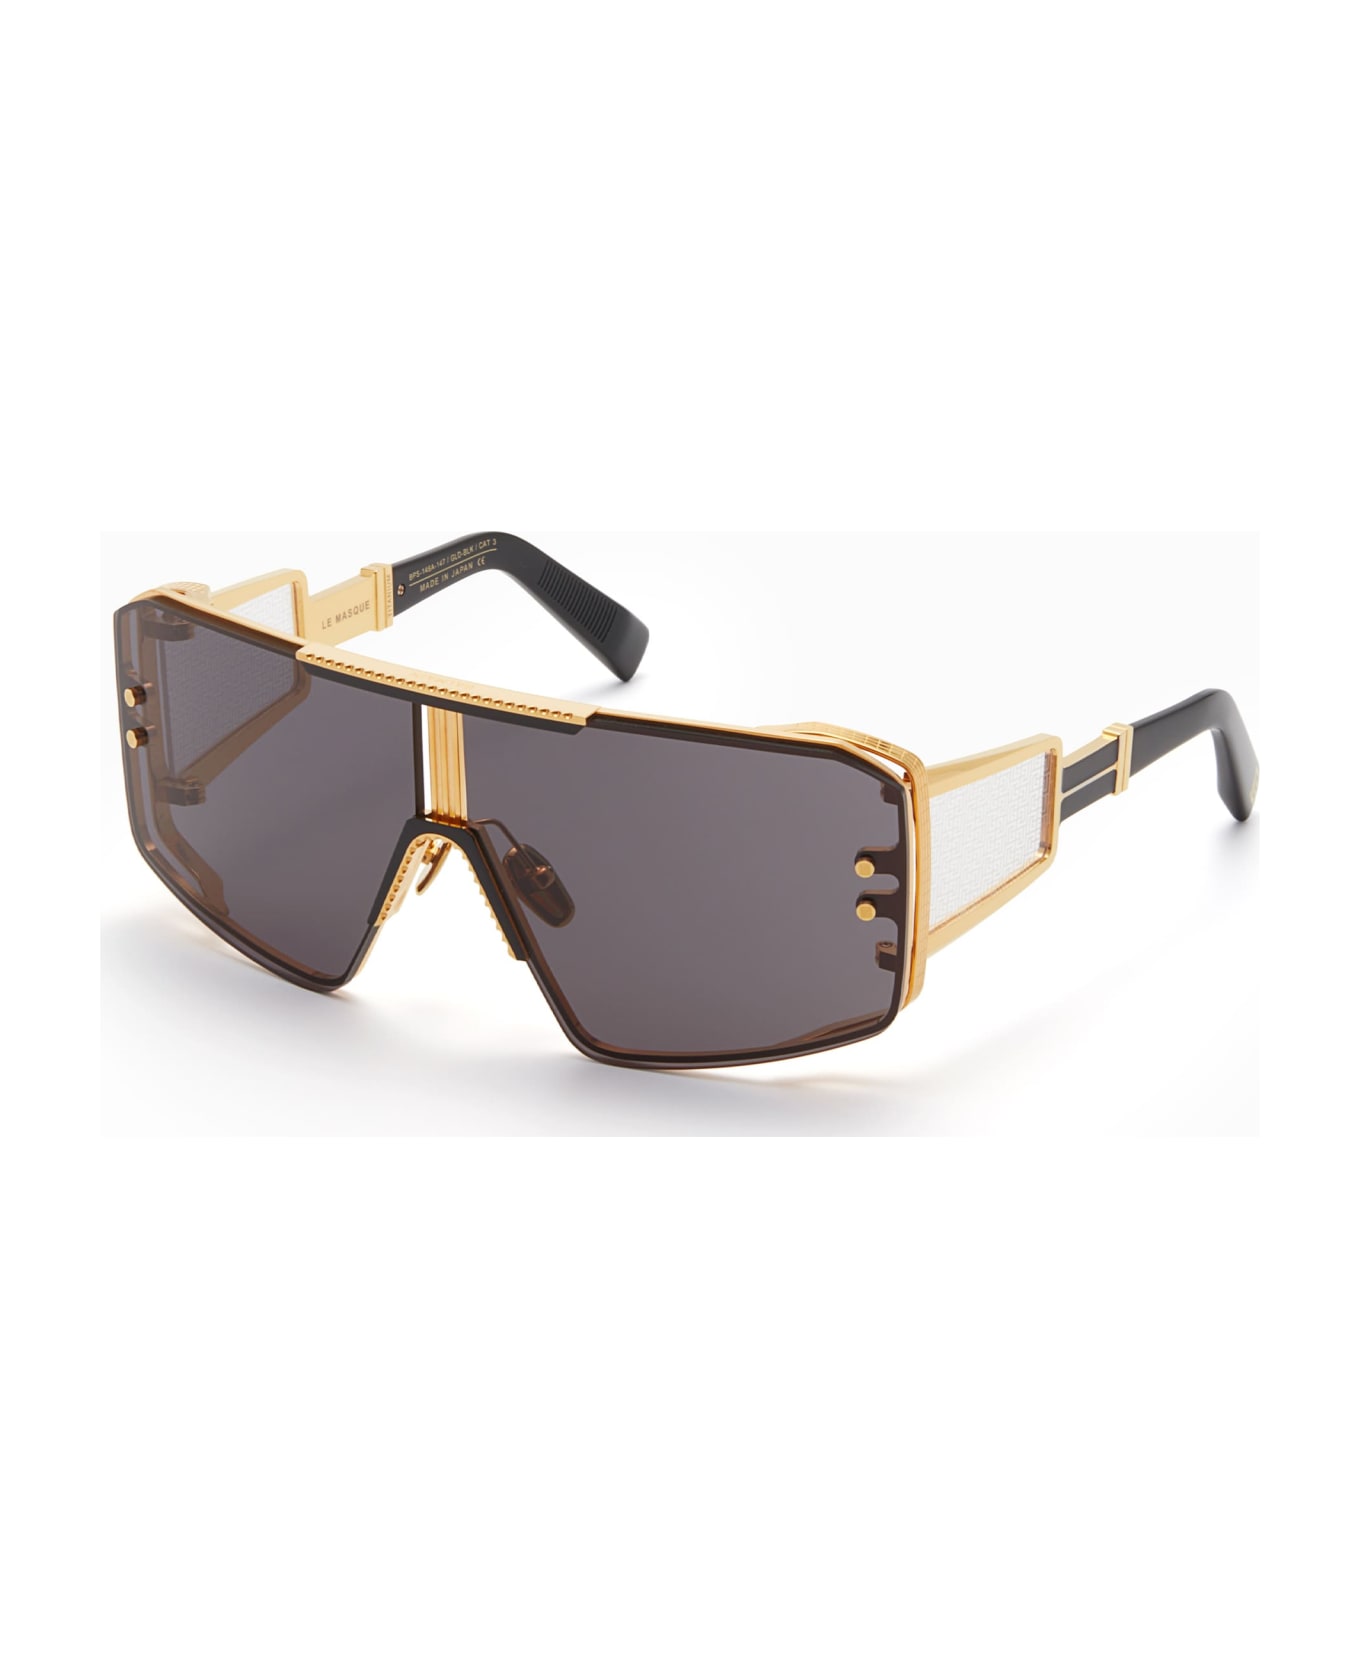 Balmain Le Masque - Gold / Black Sunglasses - Gold